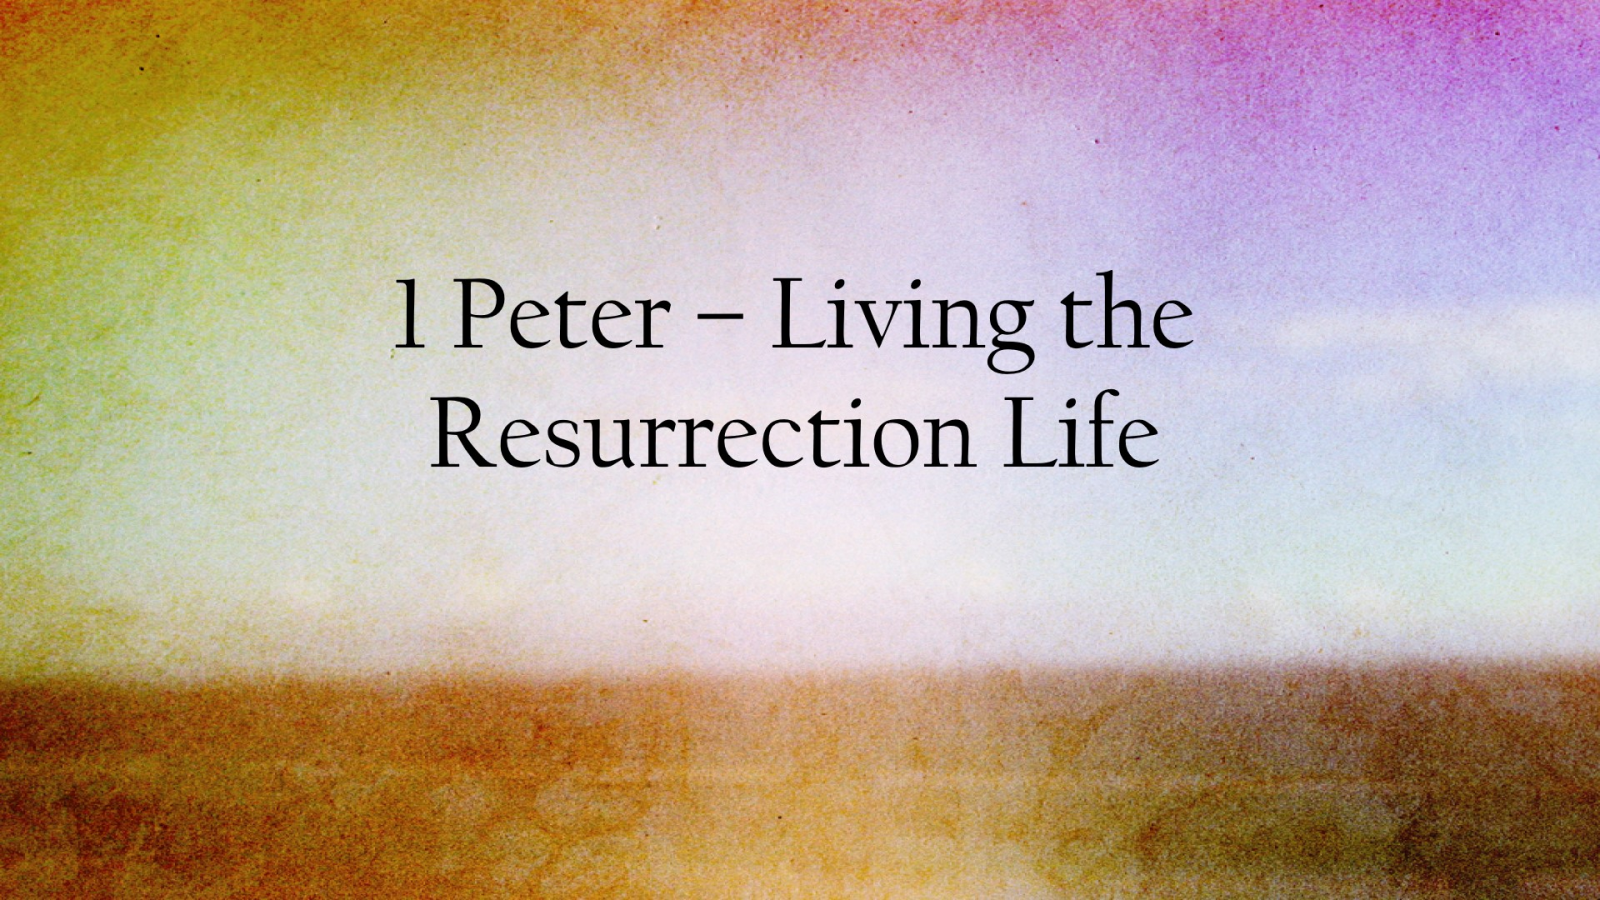 1 Peter - Living the Resurrection Life